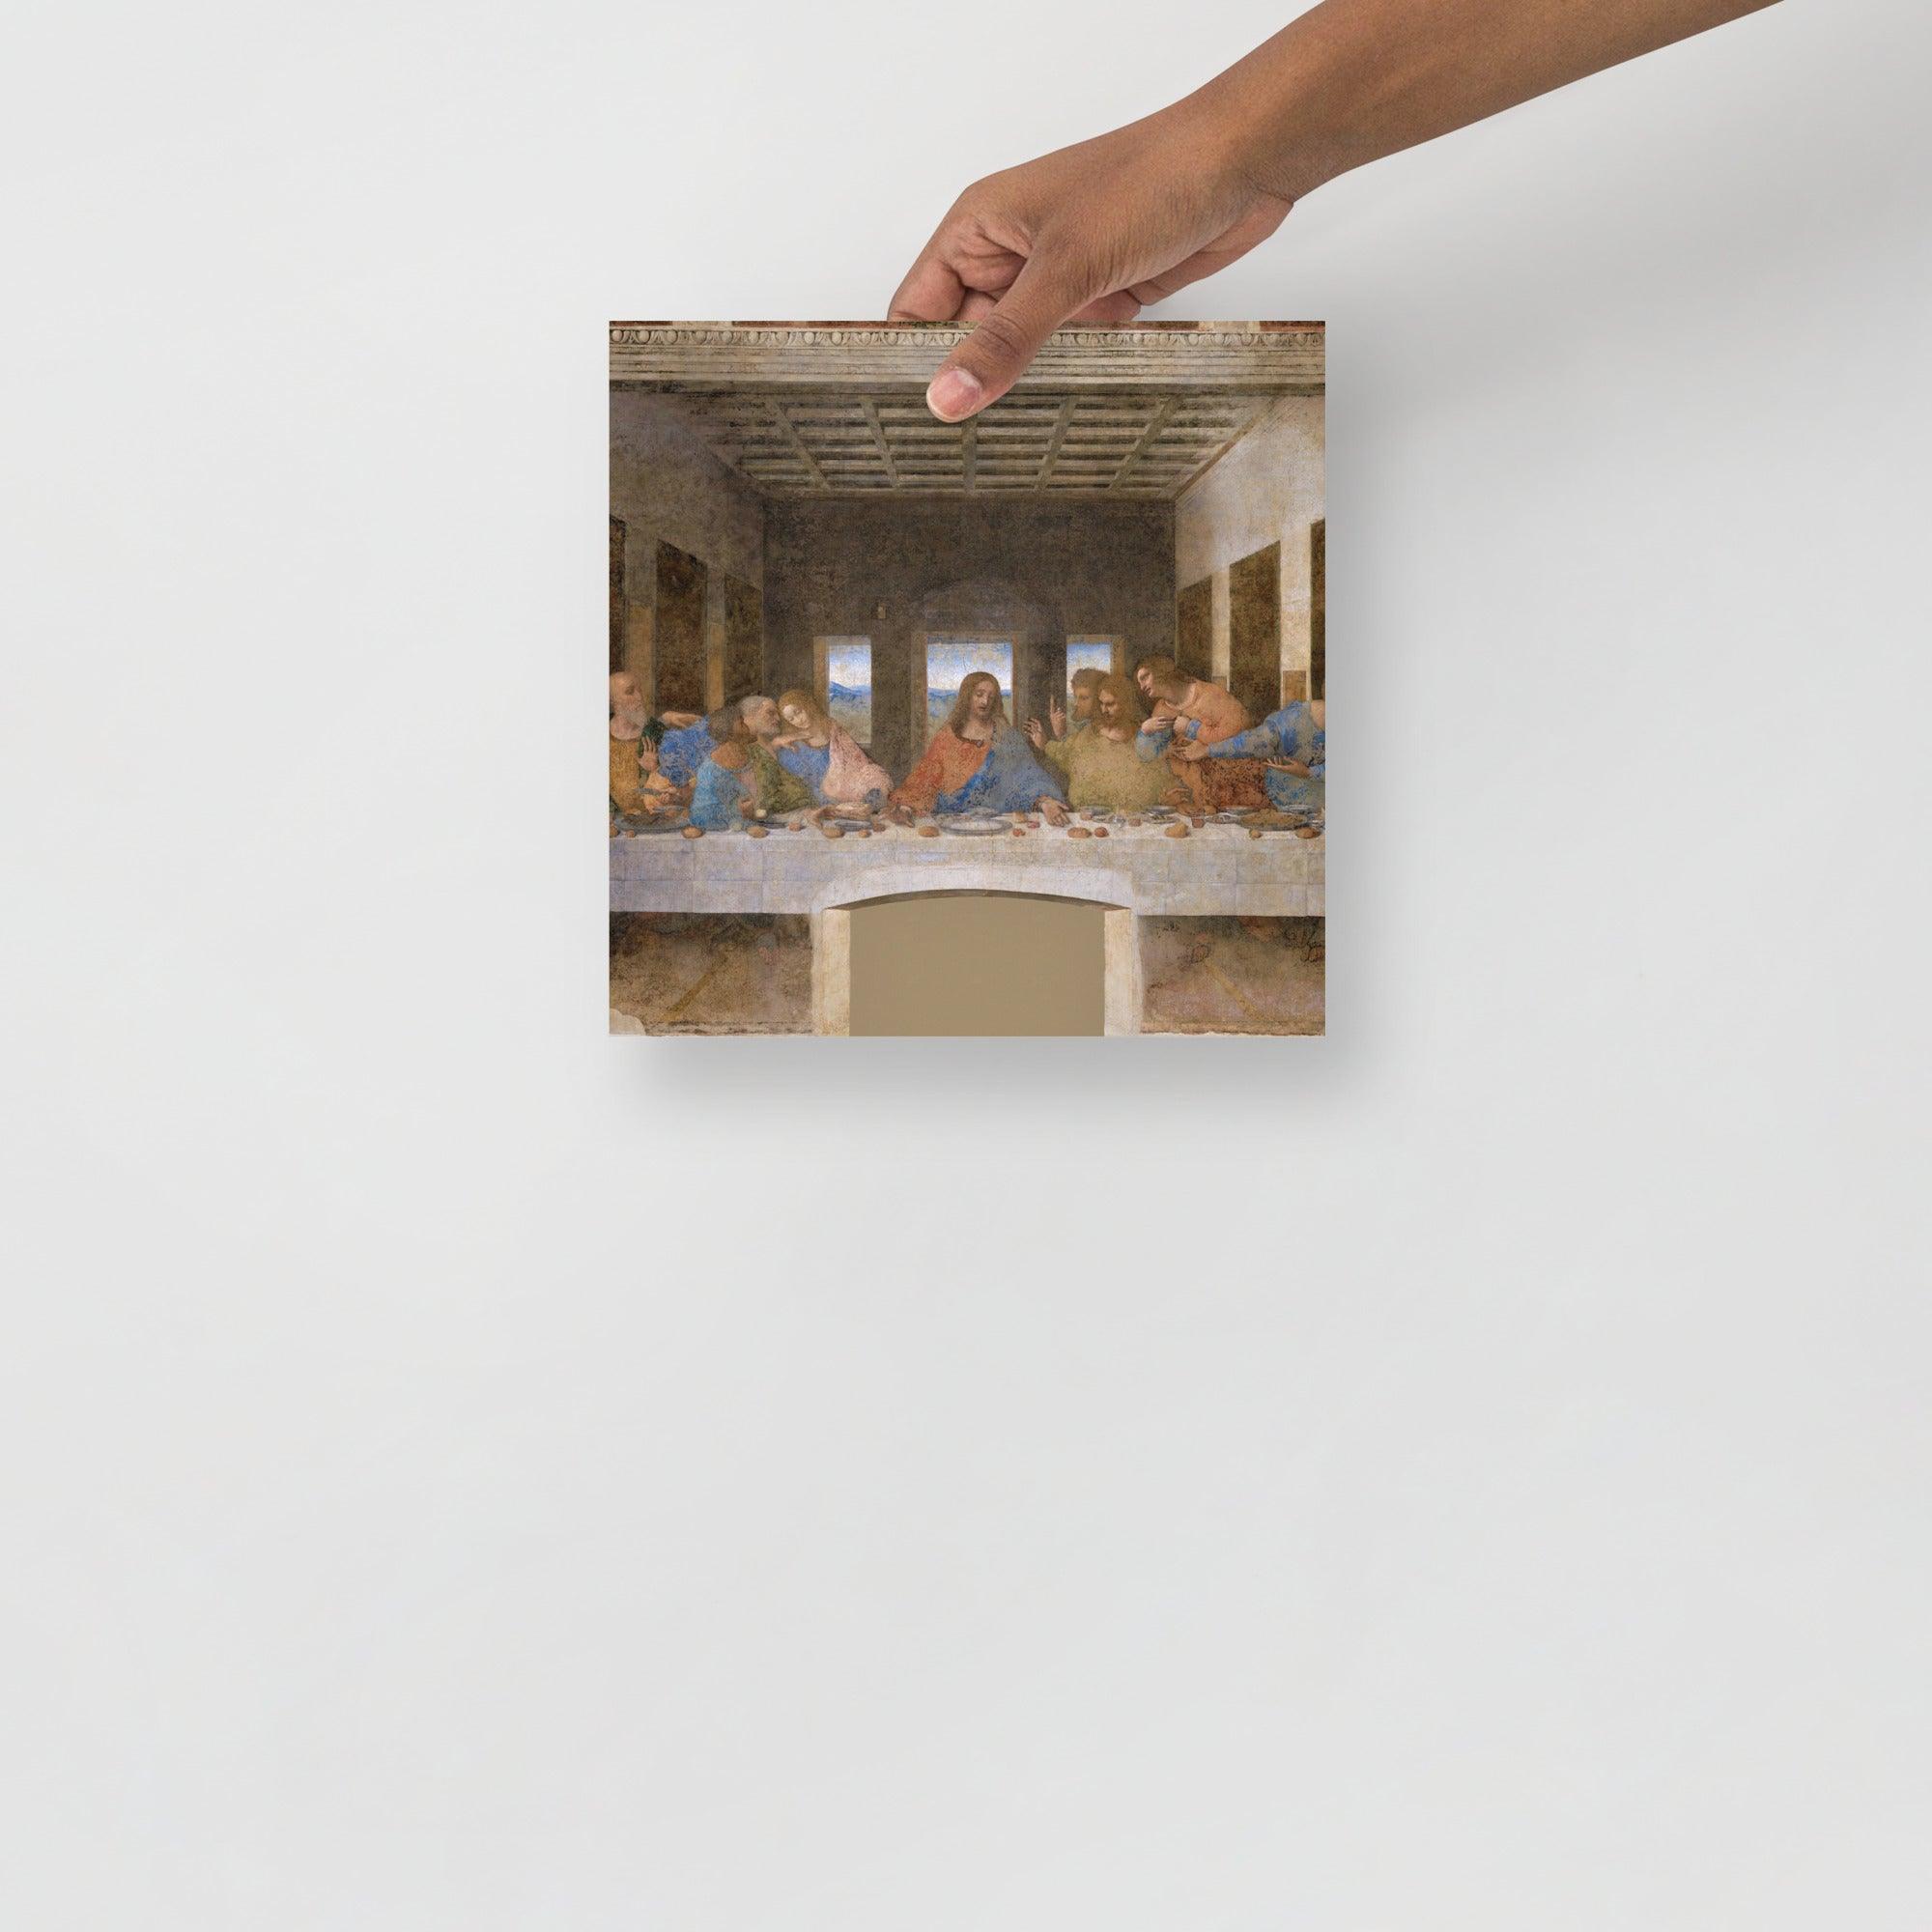 The Last Supper by Leonardo Da Vinci poster on a plain backdrop in size 10x10”.